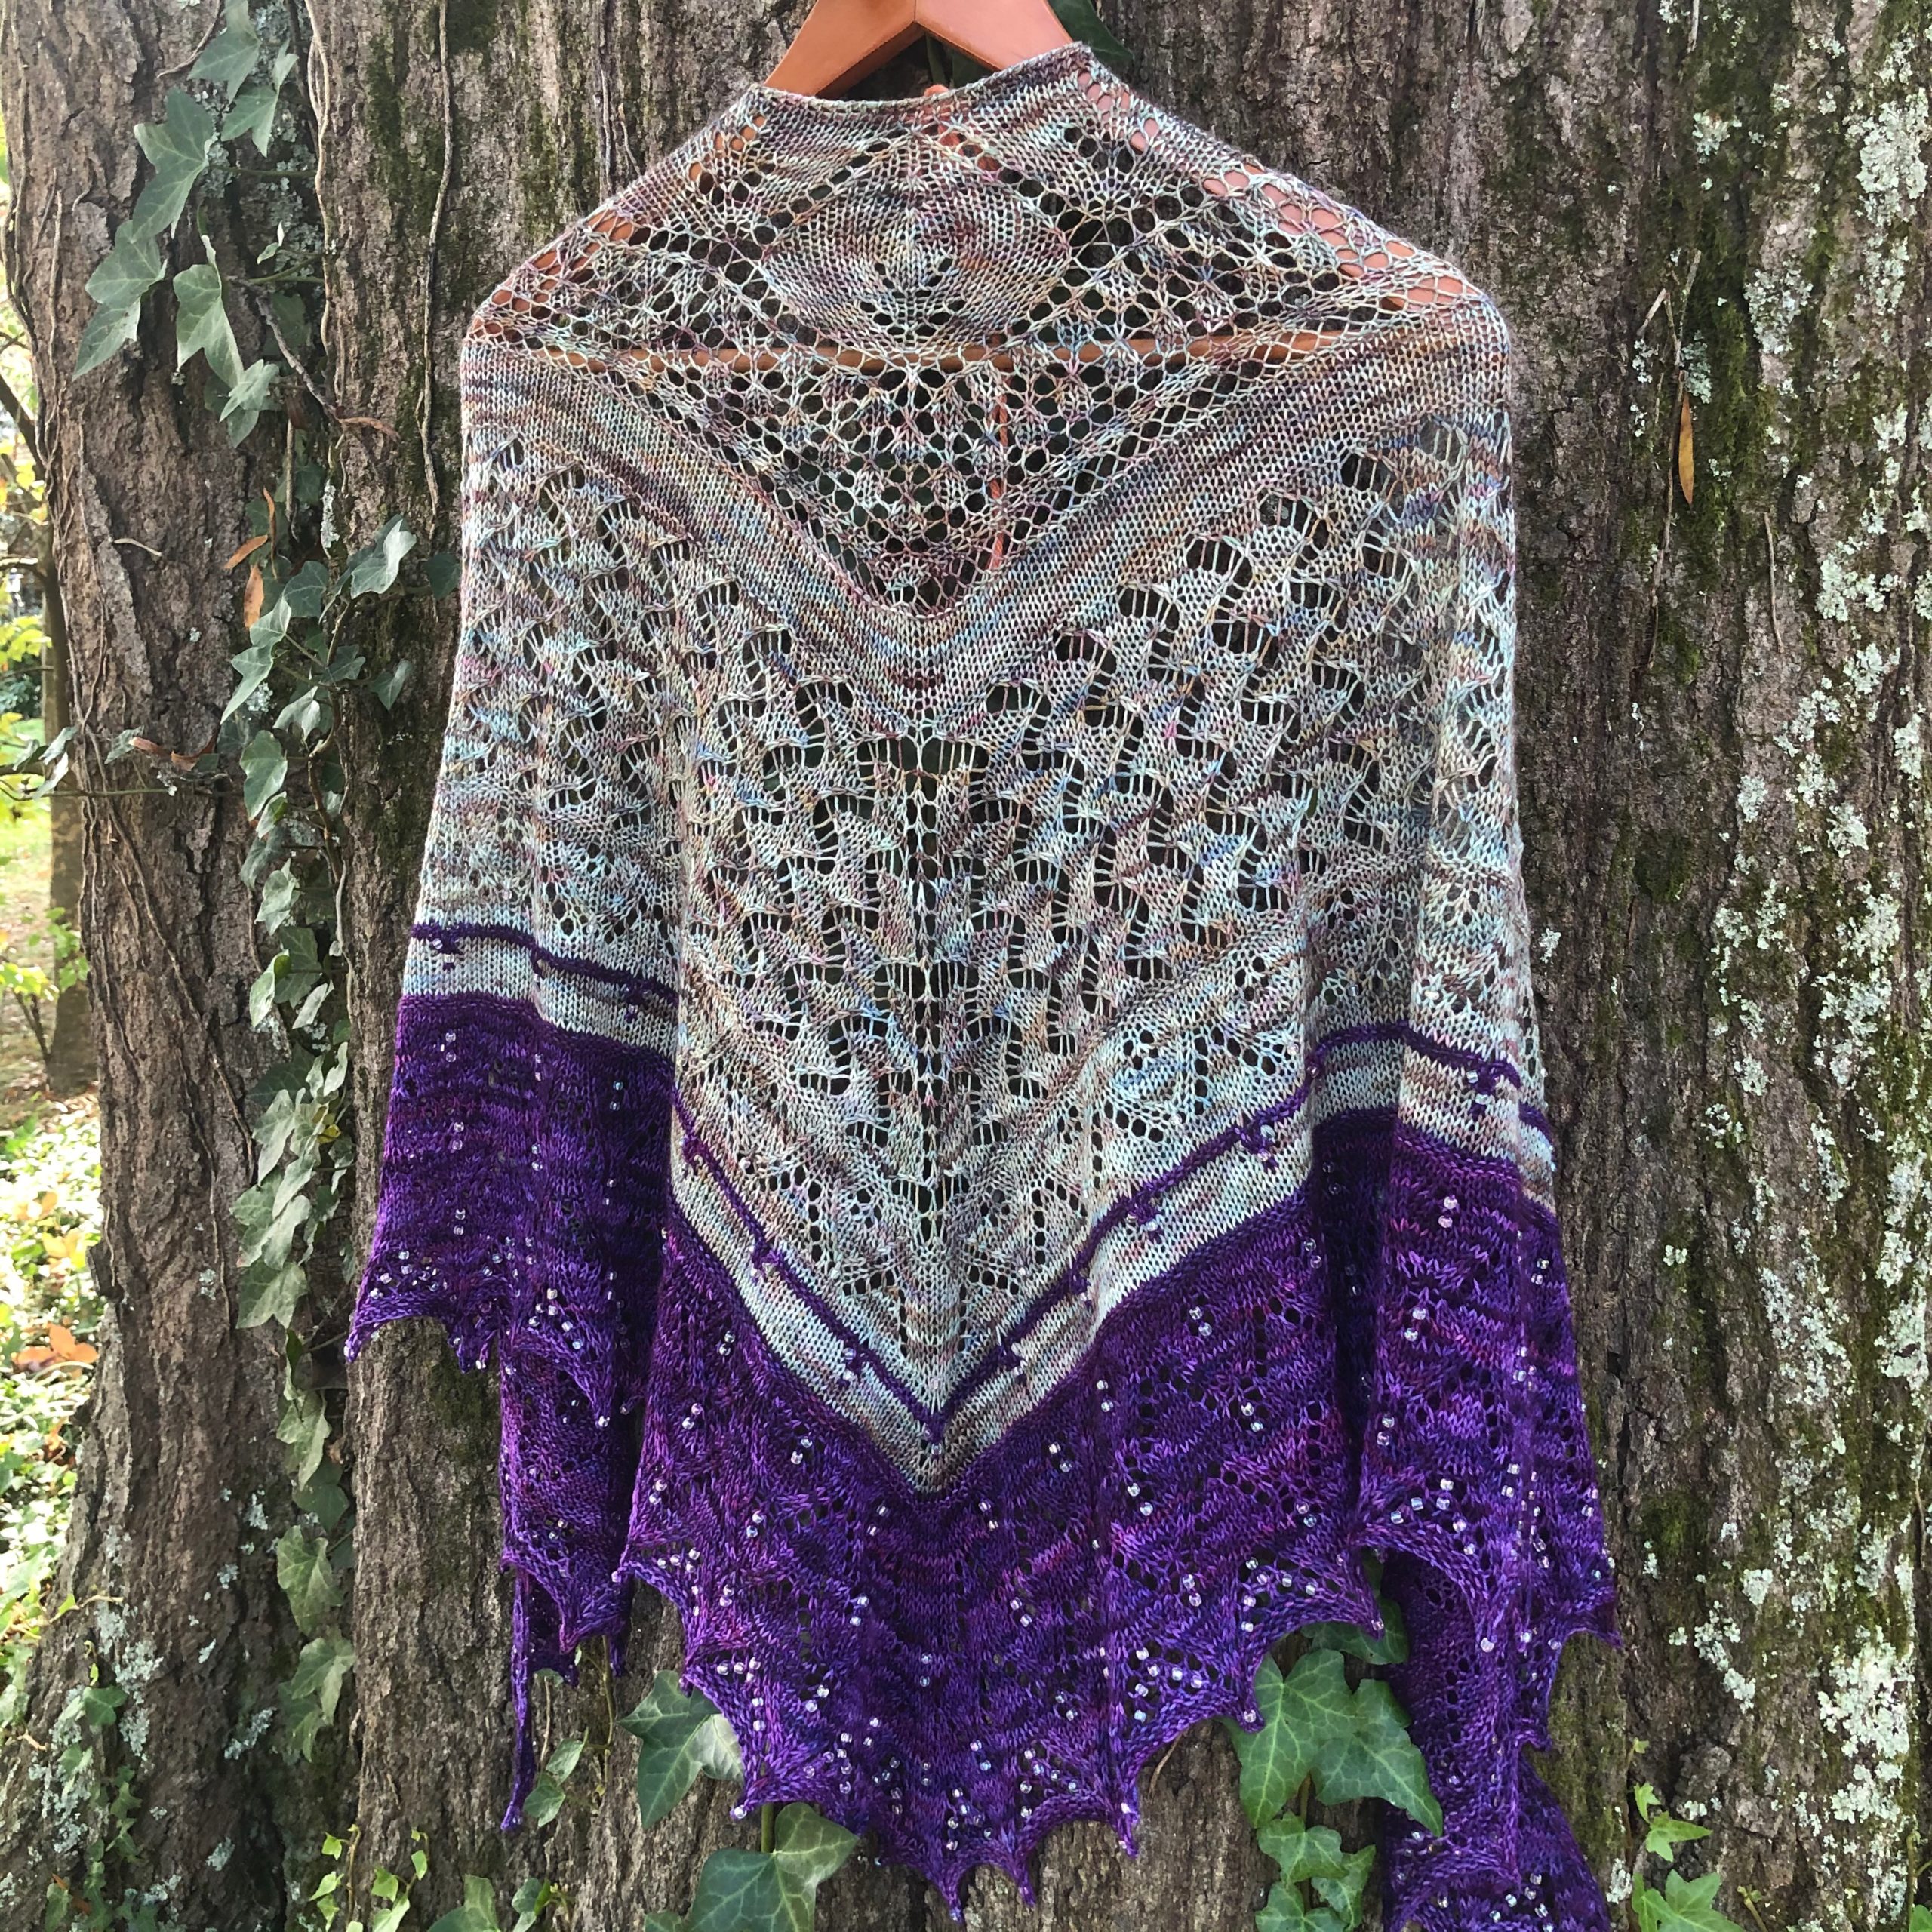 Knitting magnetic shawl pin with colored rhinestones - Jandi Creations